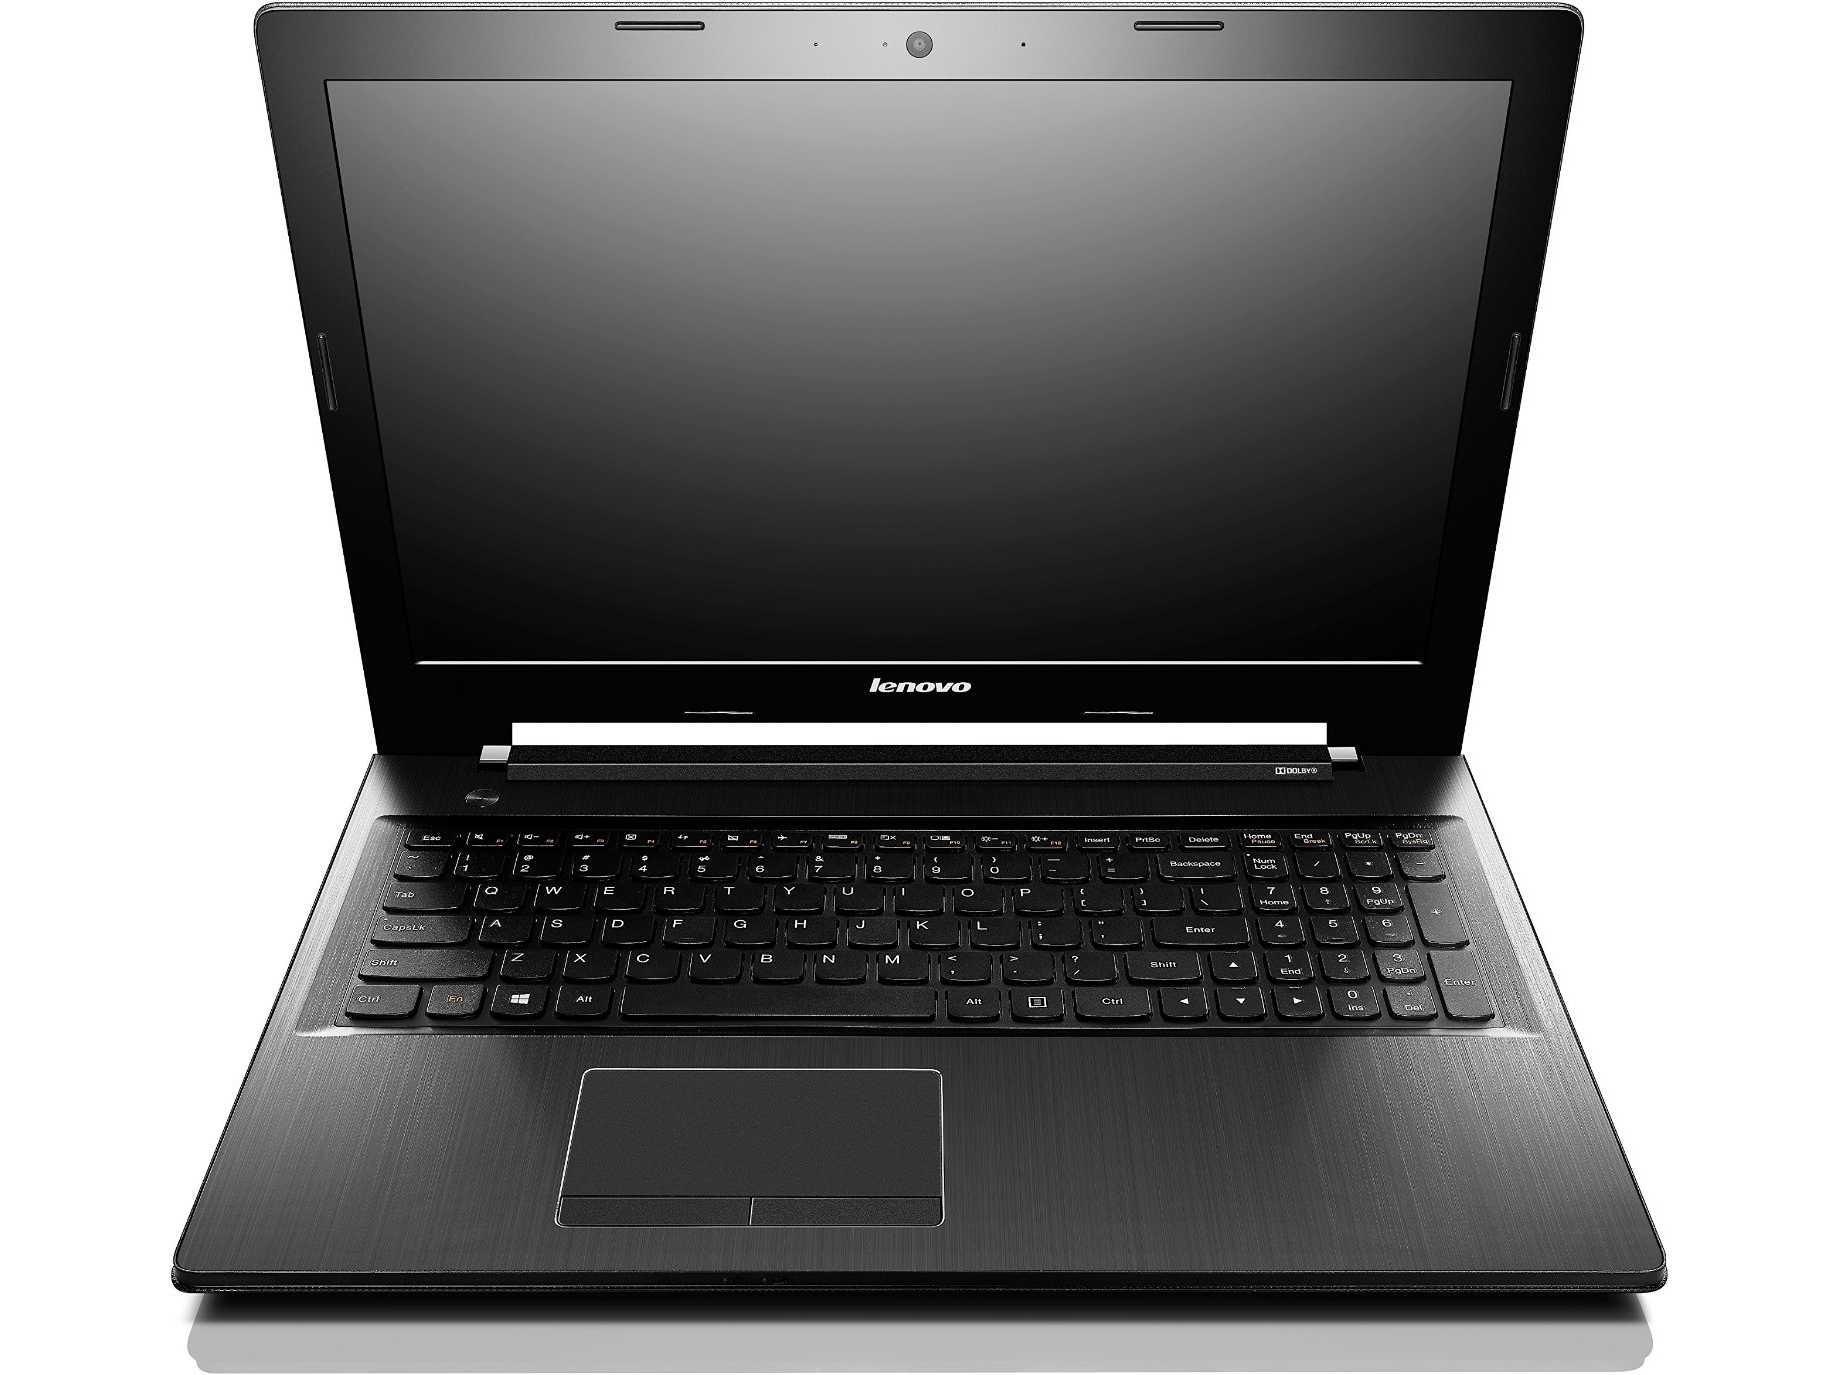 Ноутбуки Lenovo Z5070 Цена